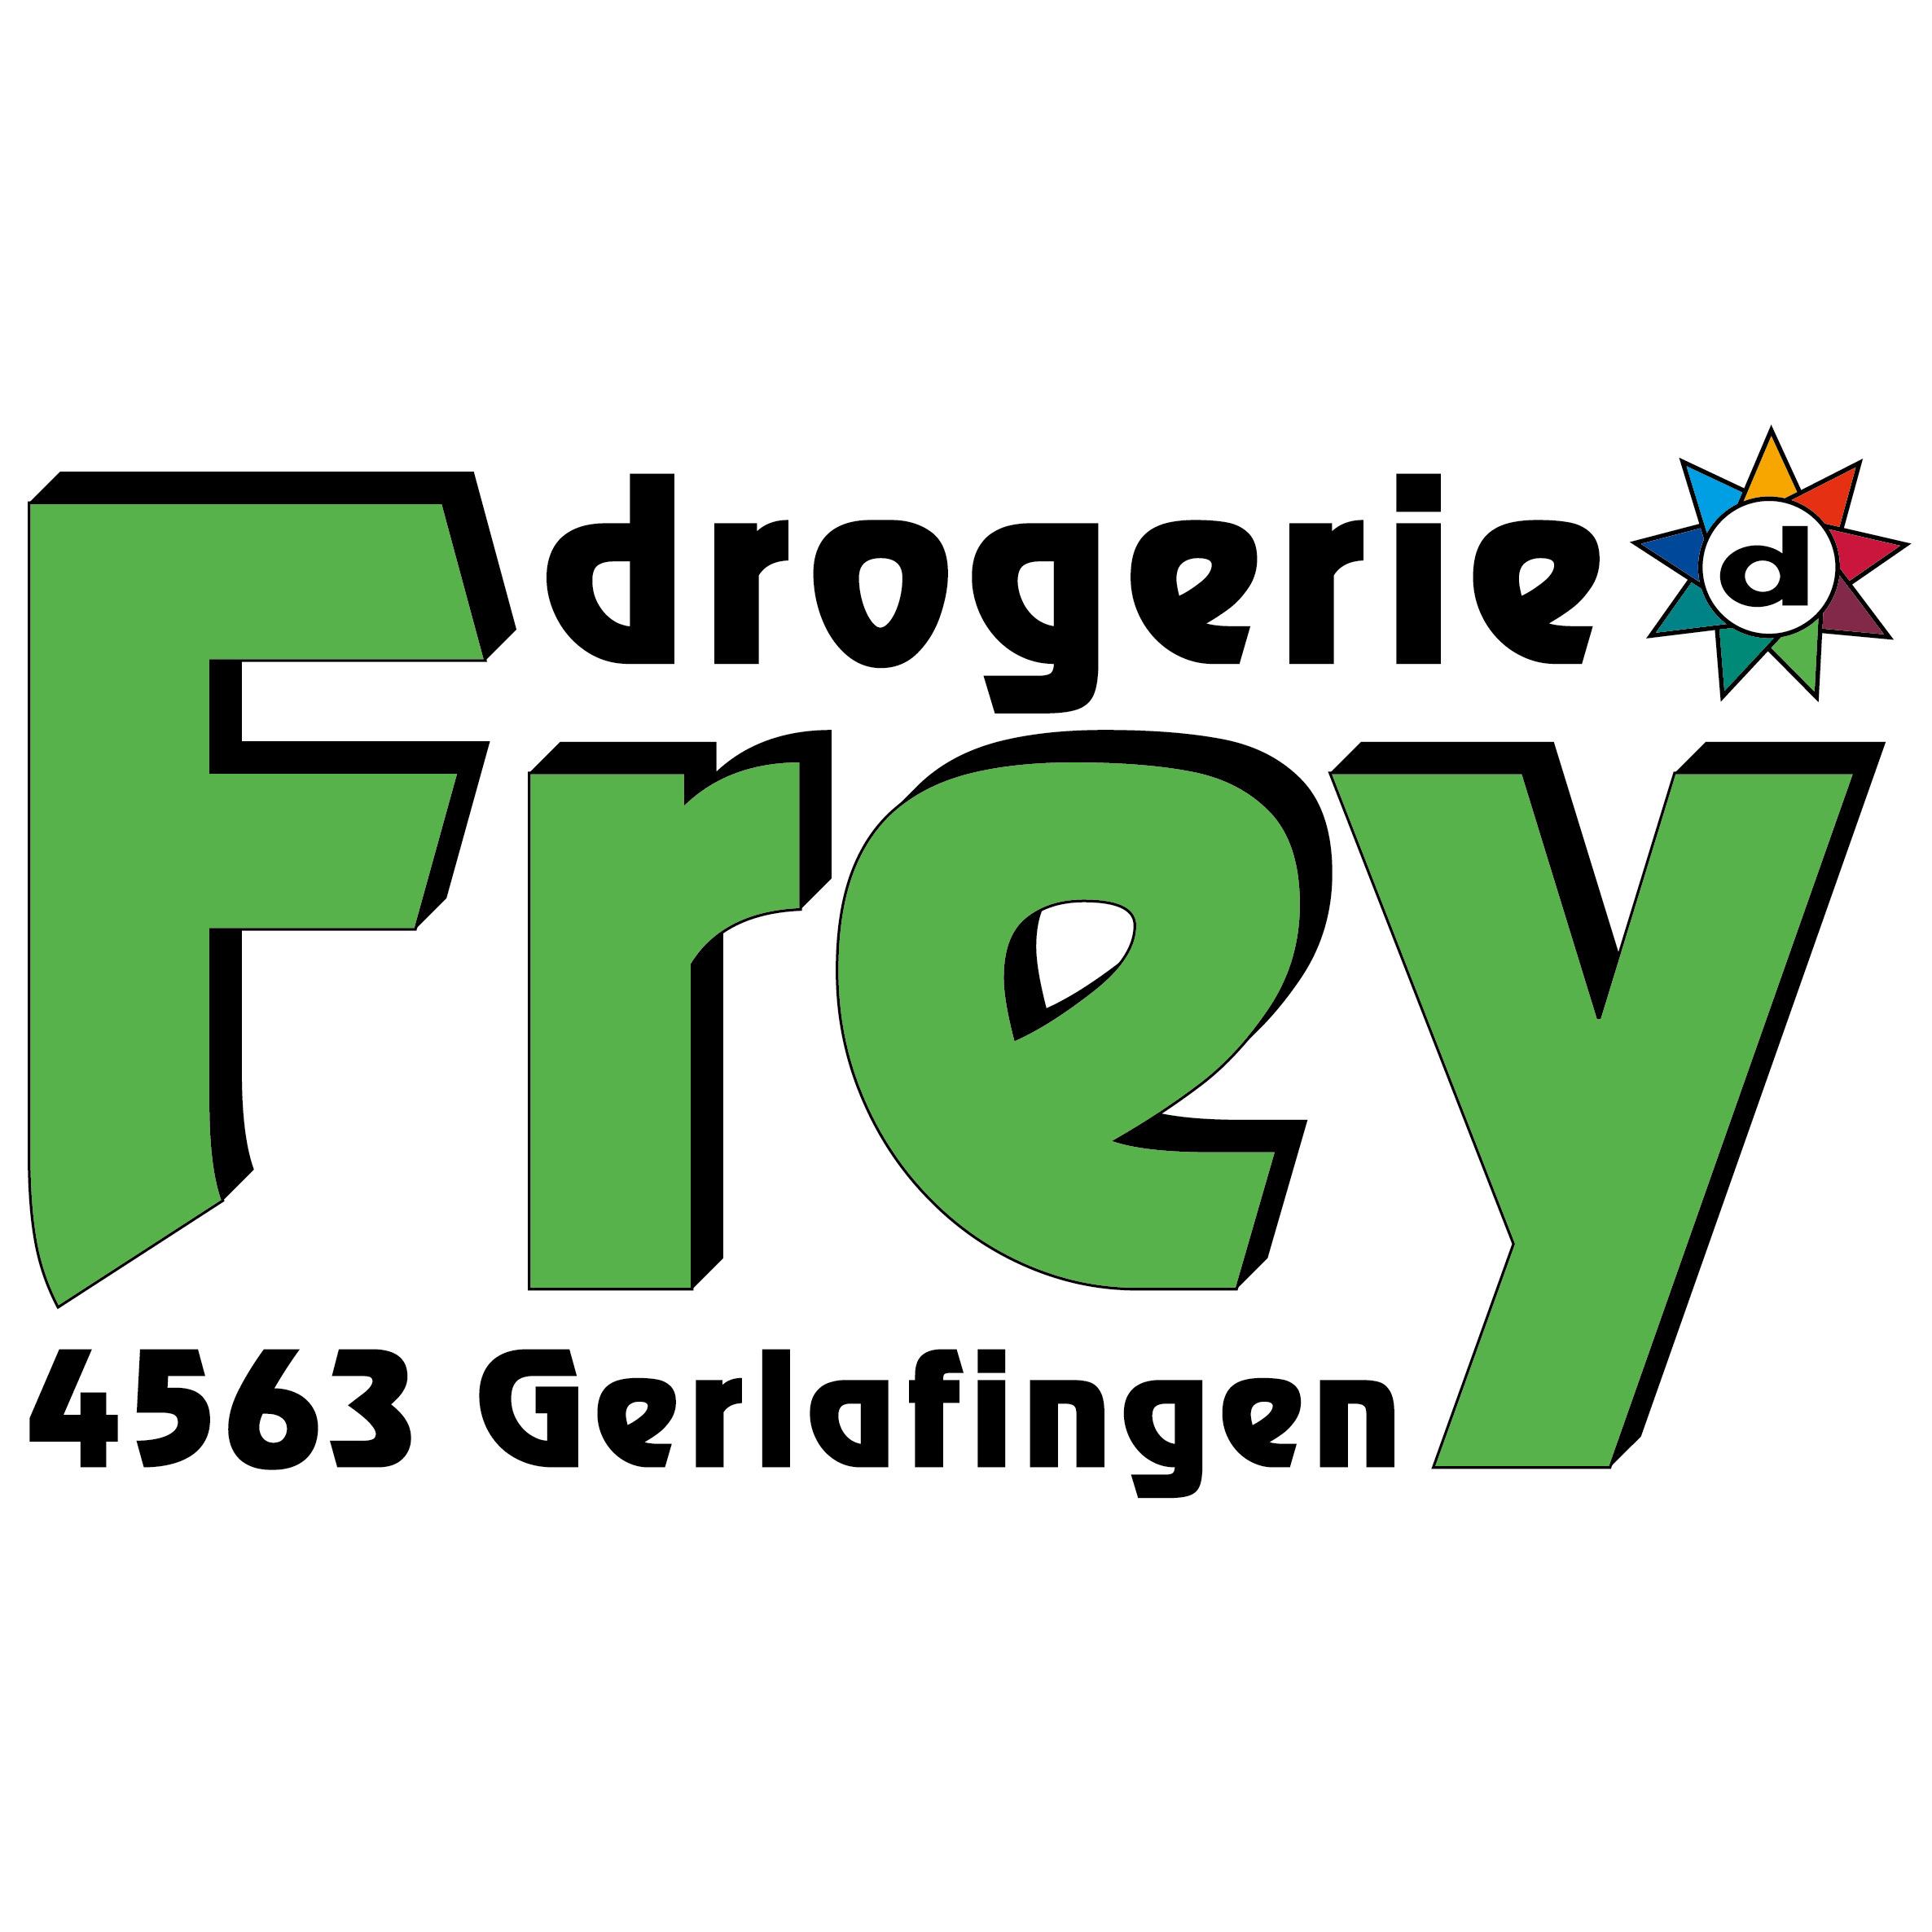 Drogerie Frey Logo